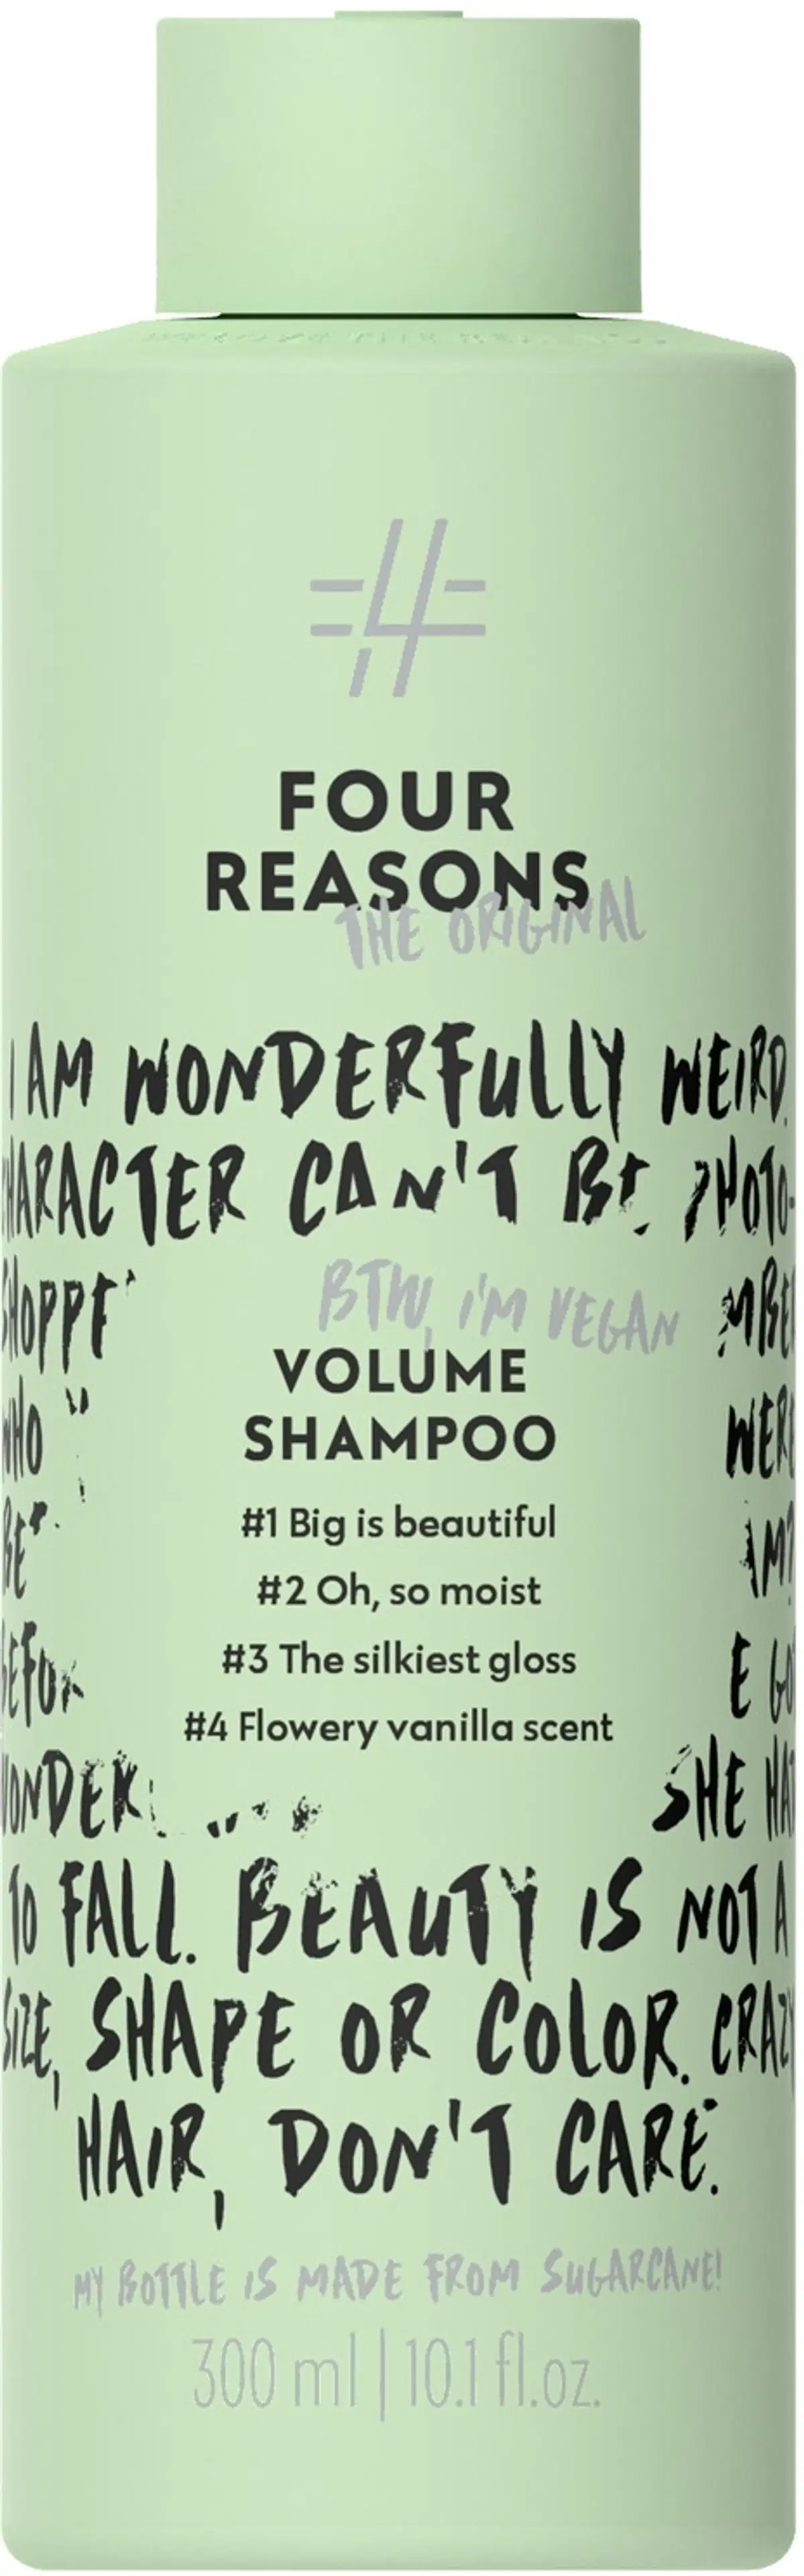 Four Reasons Original Volume Shampoo 300 ml